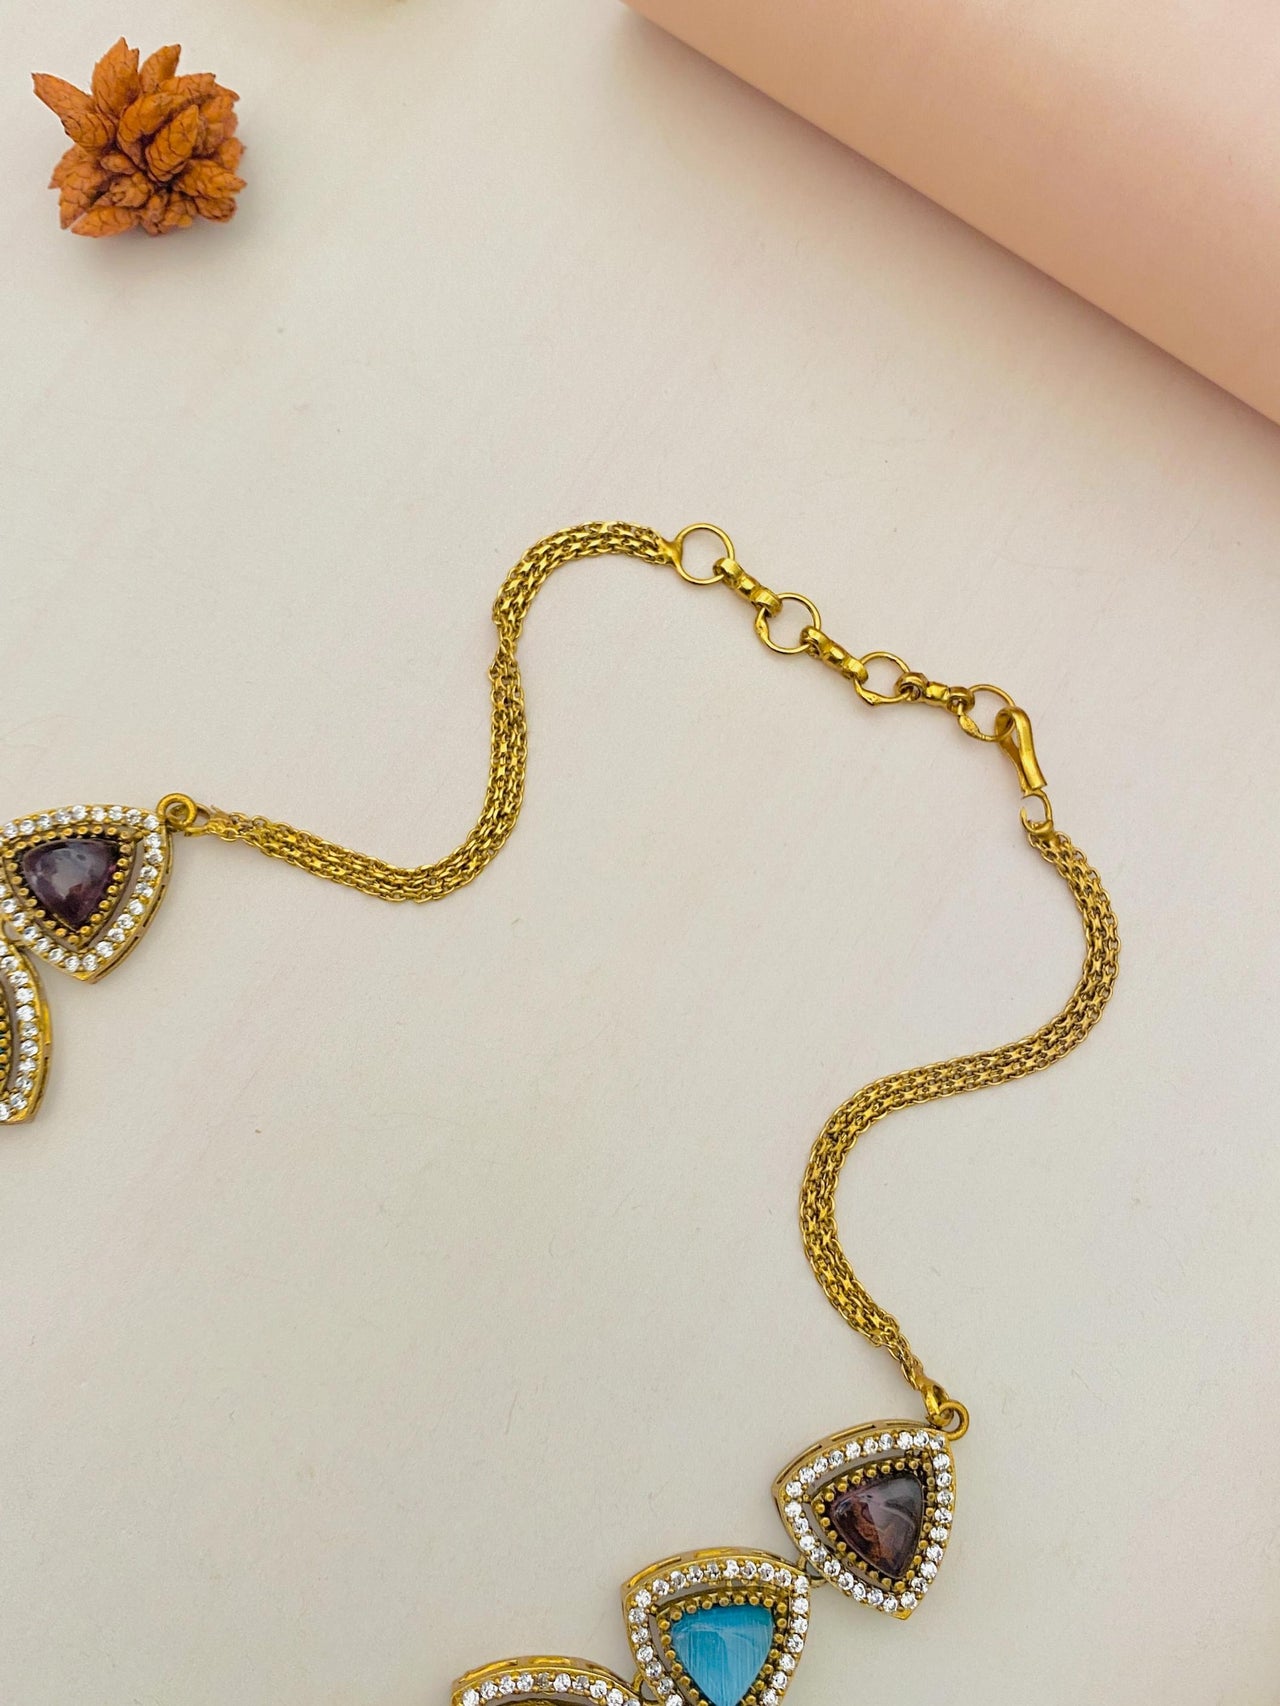 Gold Plated MultiColour Sabyasachi Diamond Necklace Set - Abdesignsjewellery